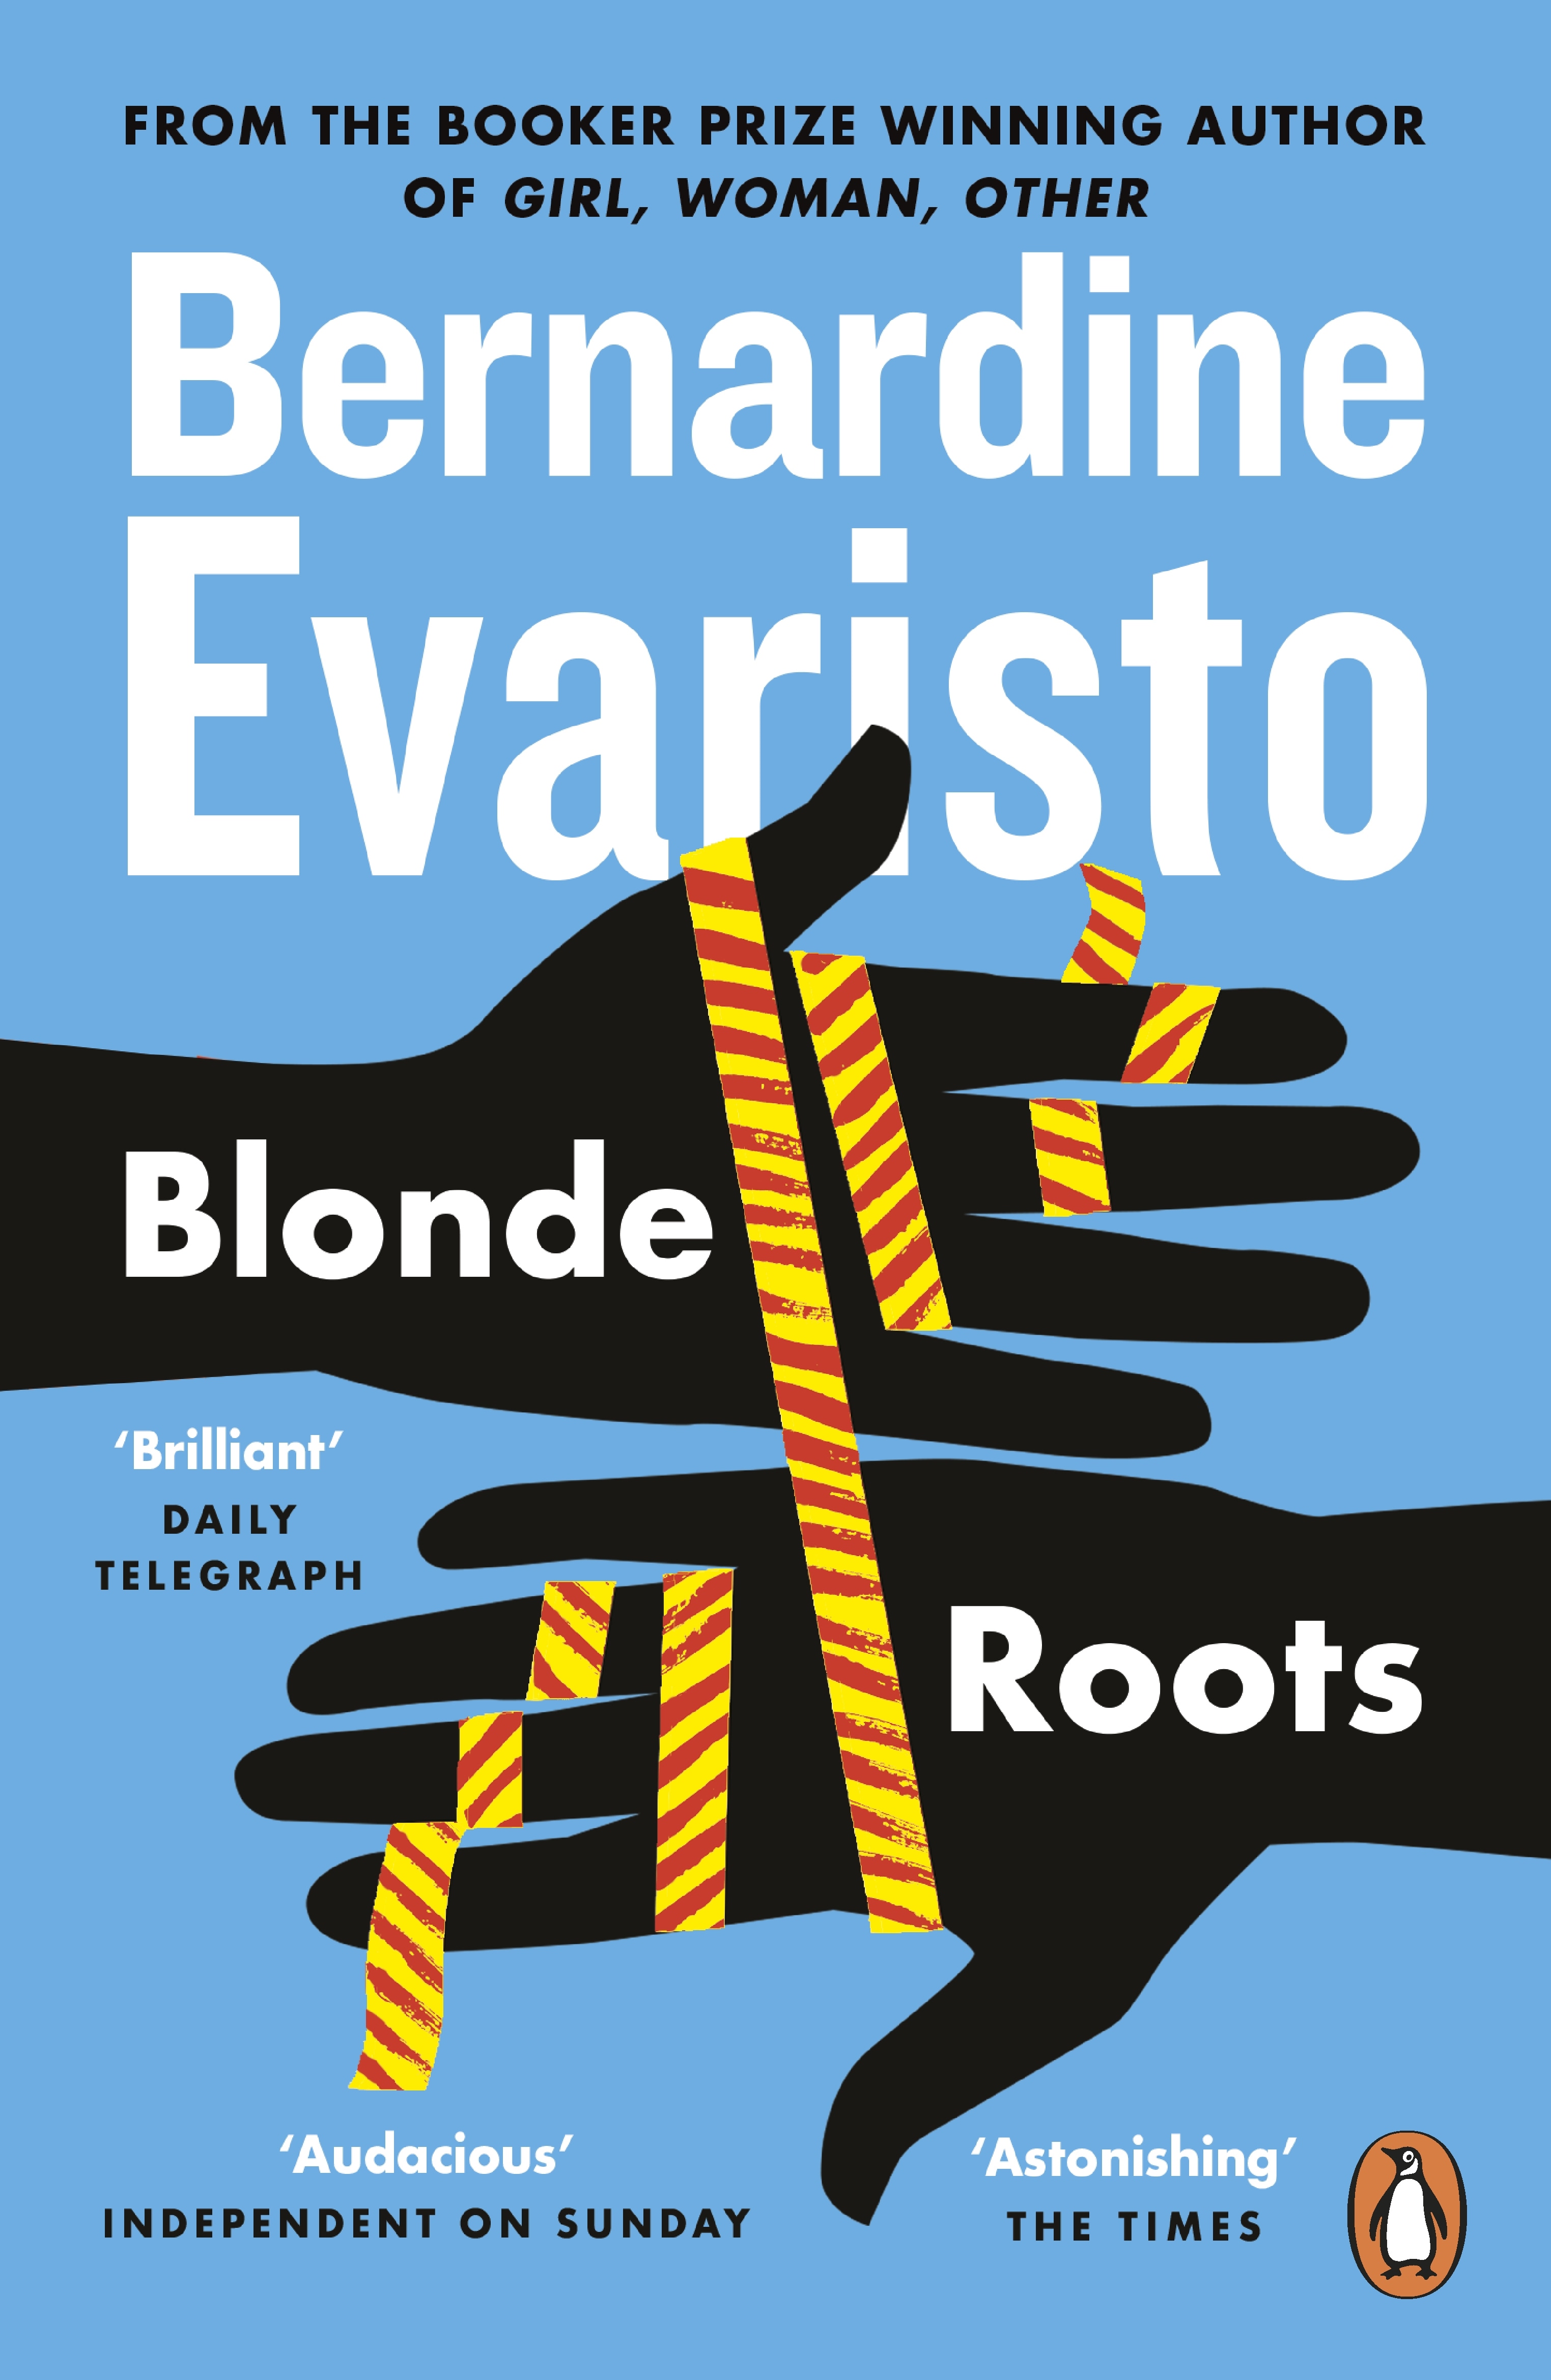 Book “Blonde Roots” by Bernardine Evaristo — April 30, 2009